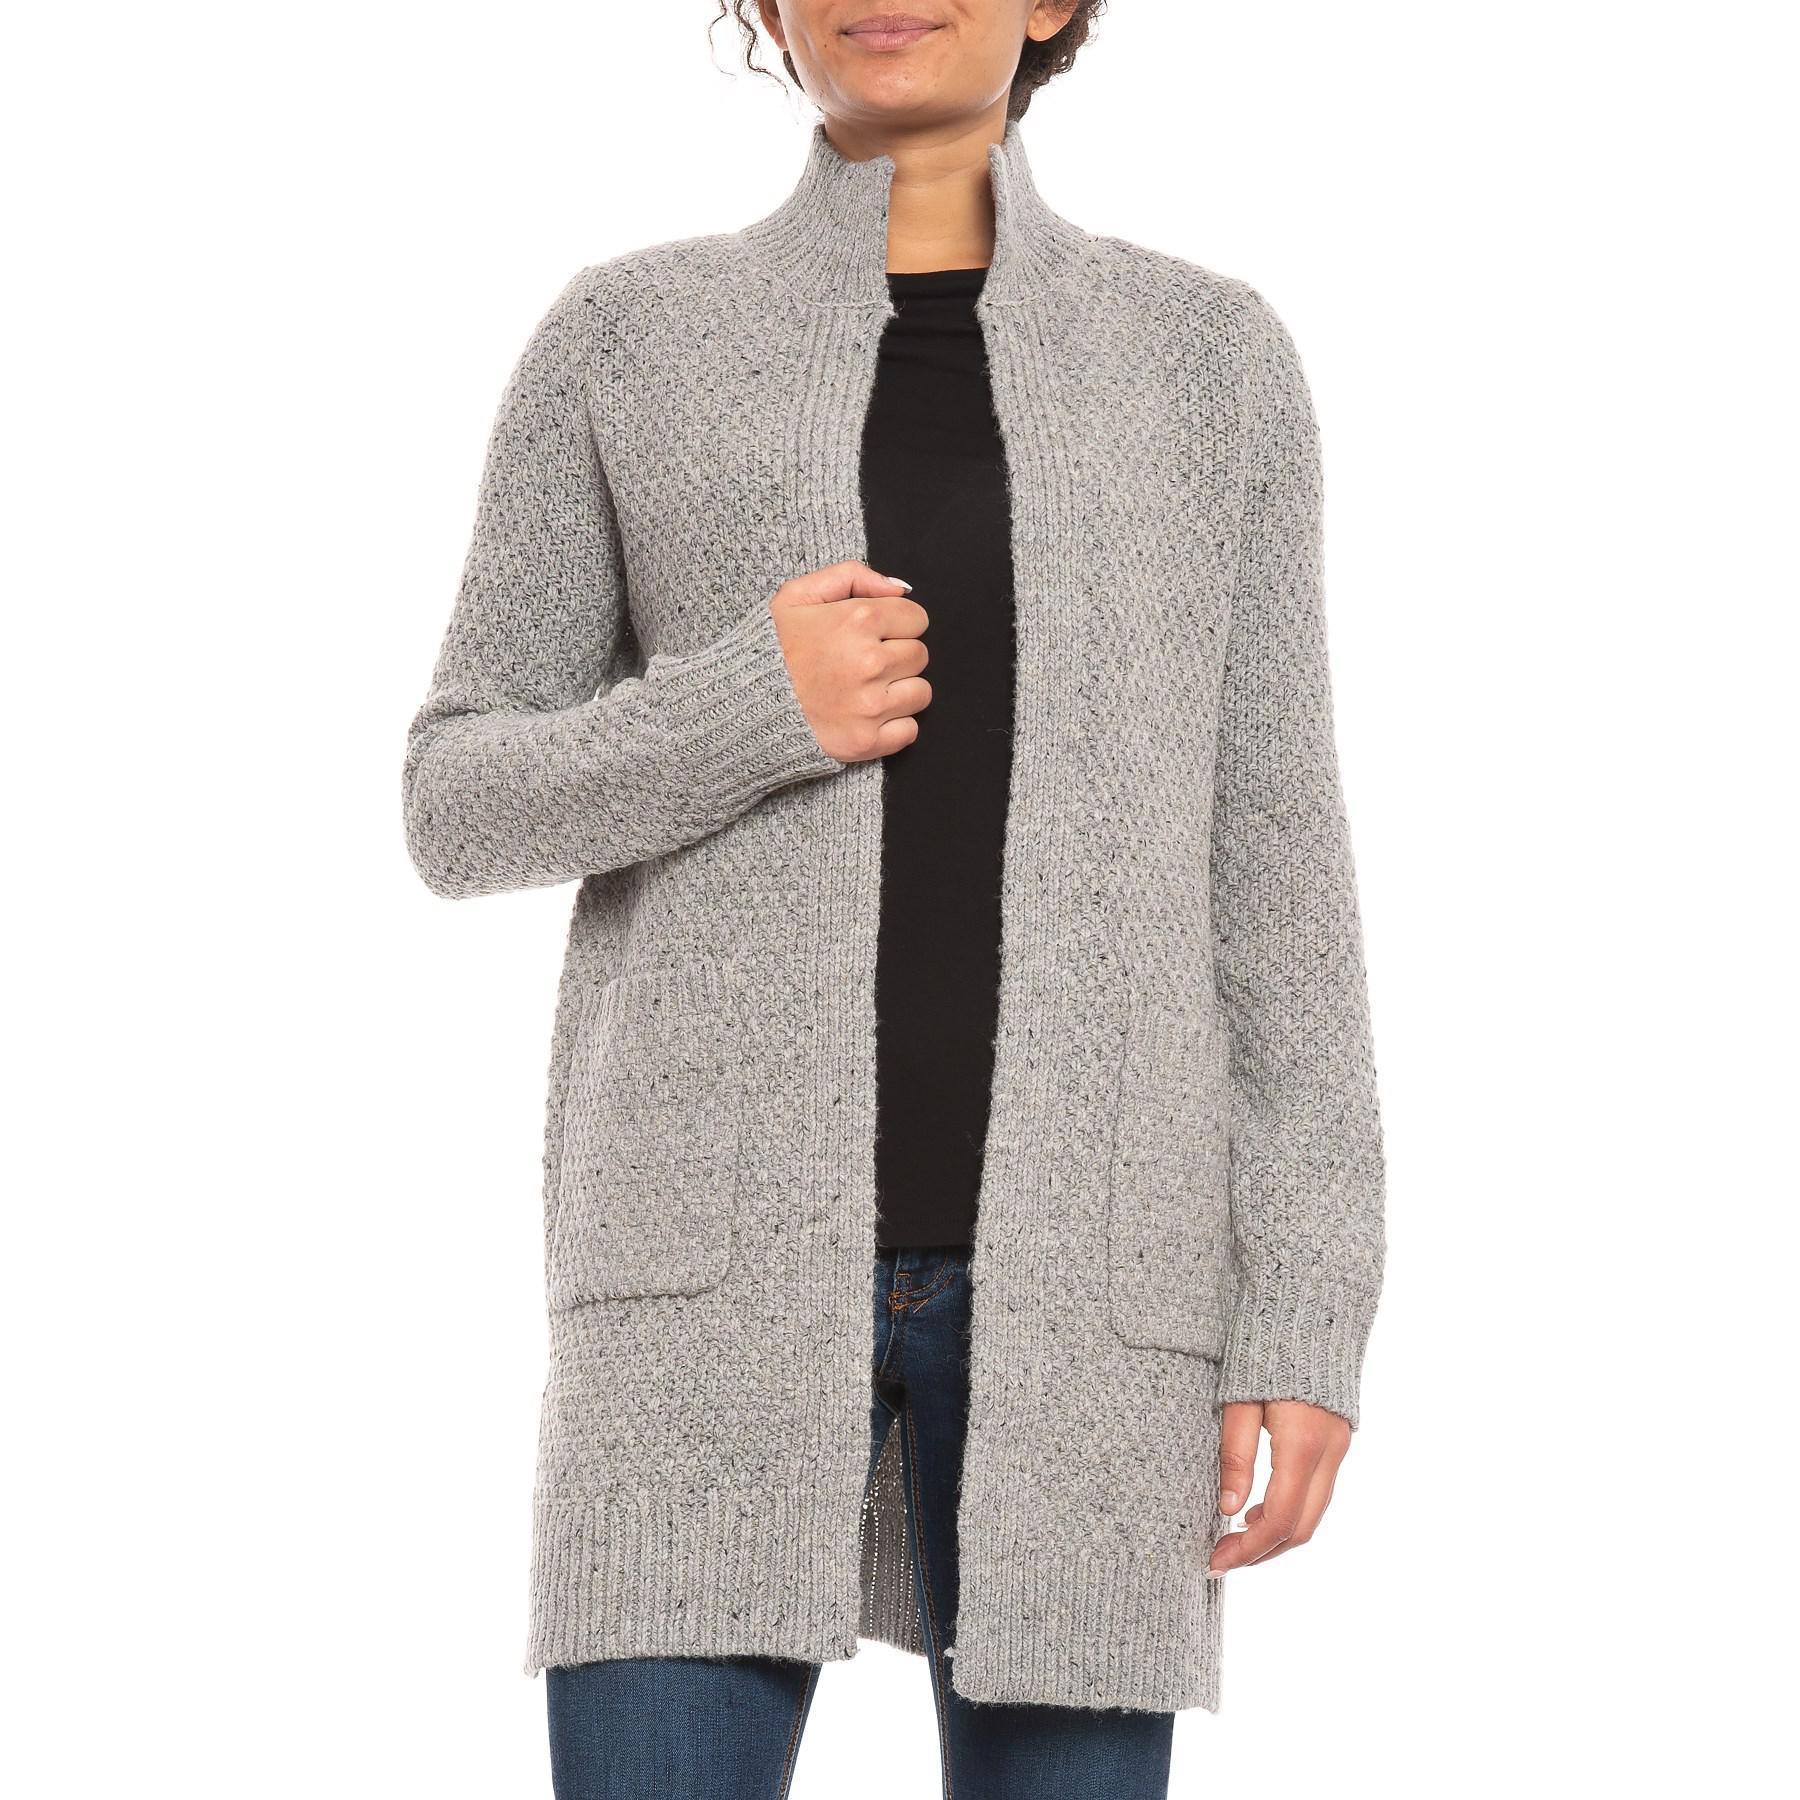 Cynthia Rowley Wool Donegal Cardigan Sweater in Gray - Lyst